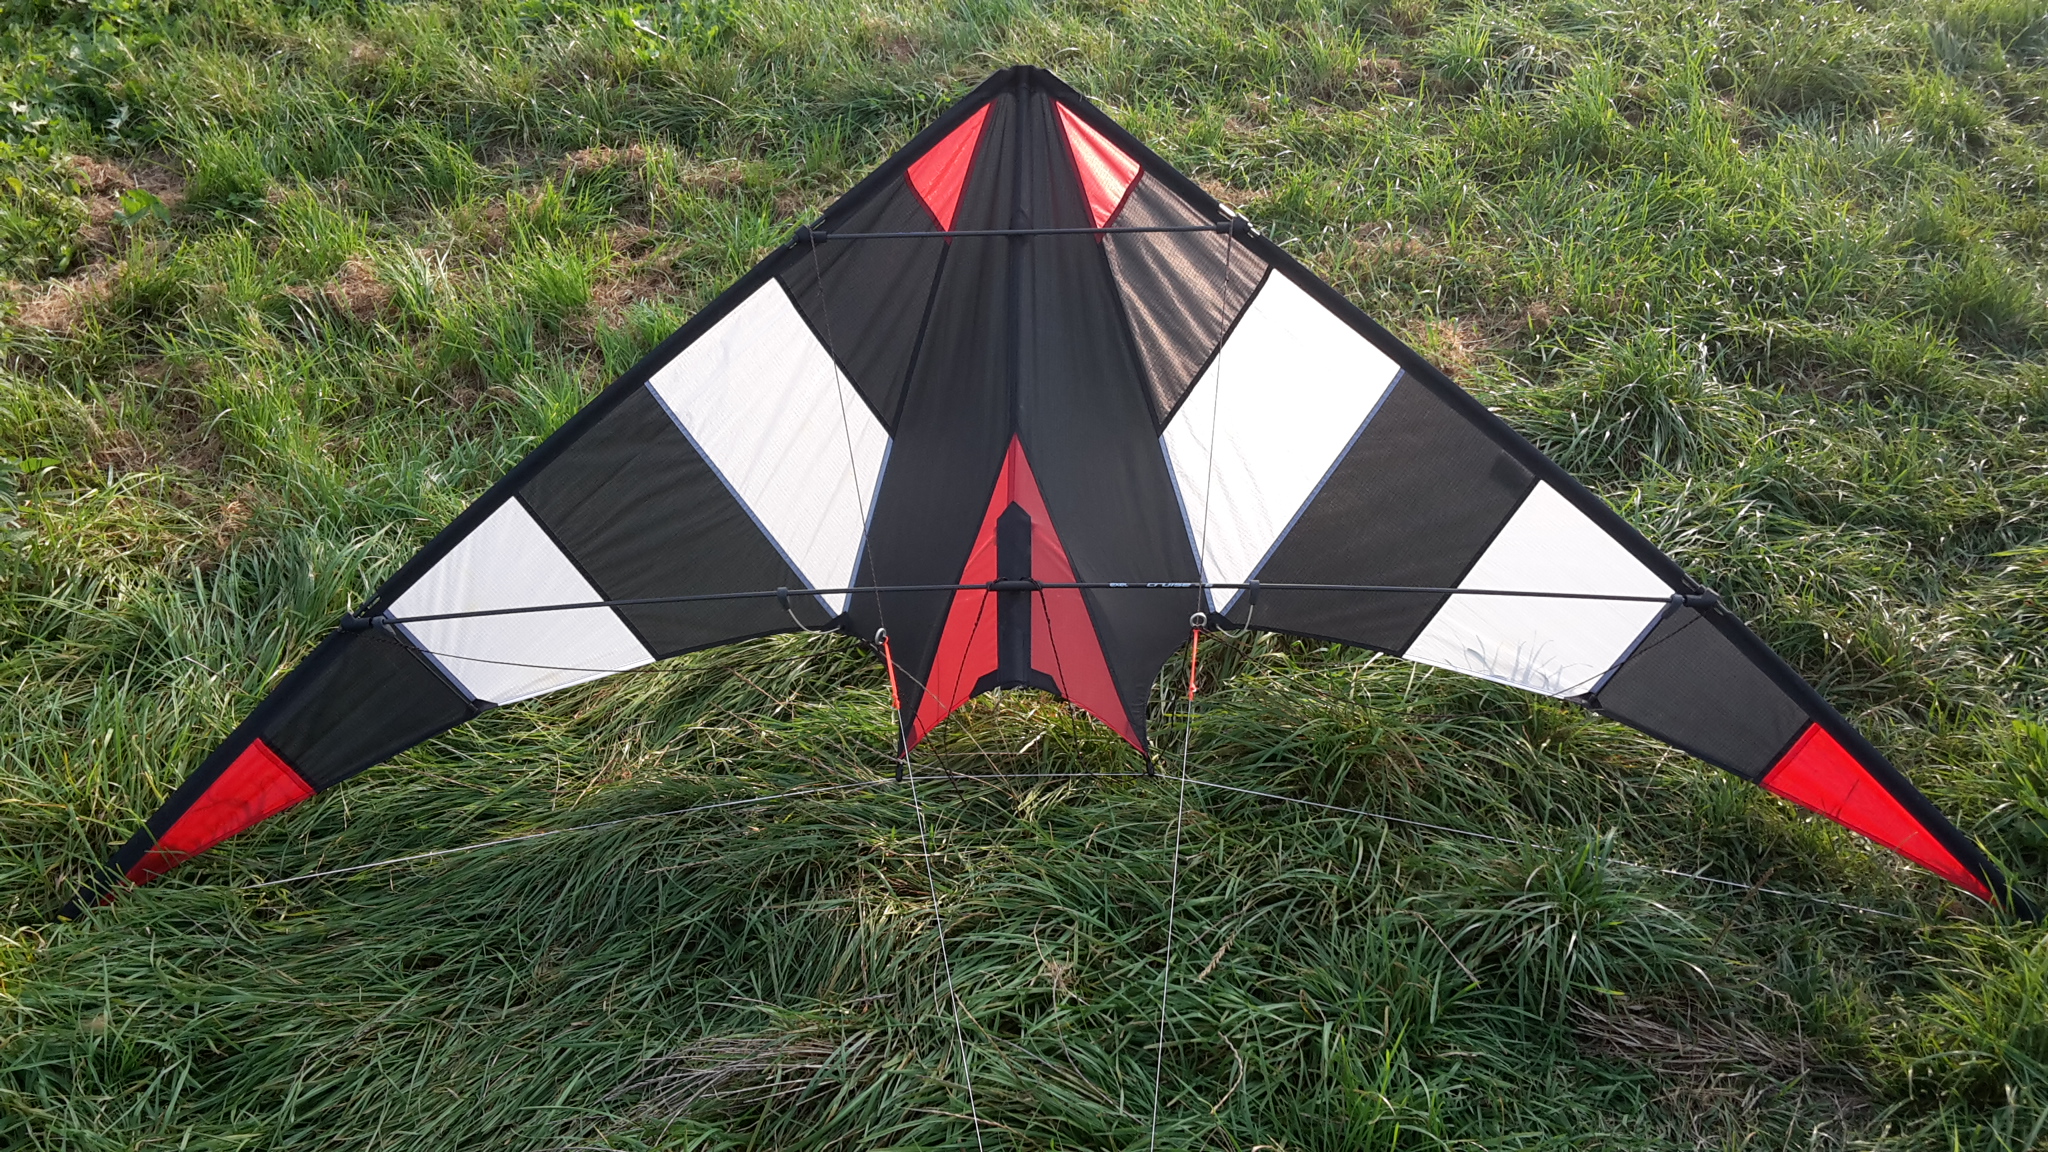 Hot Stripe - Space Kites?